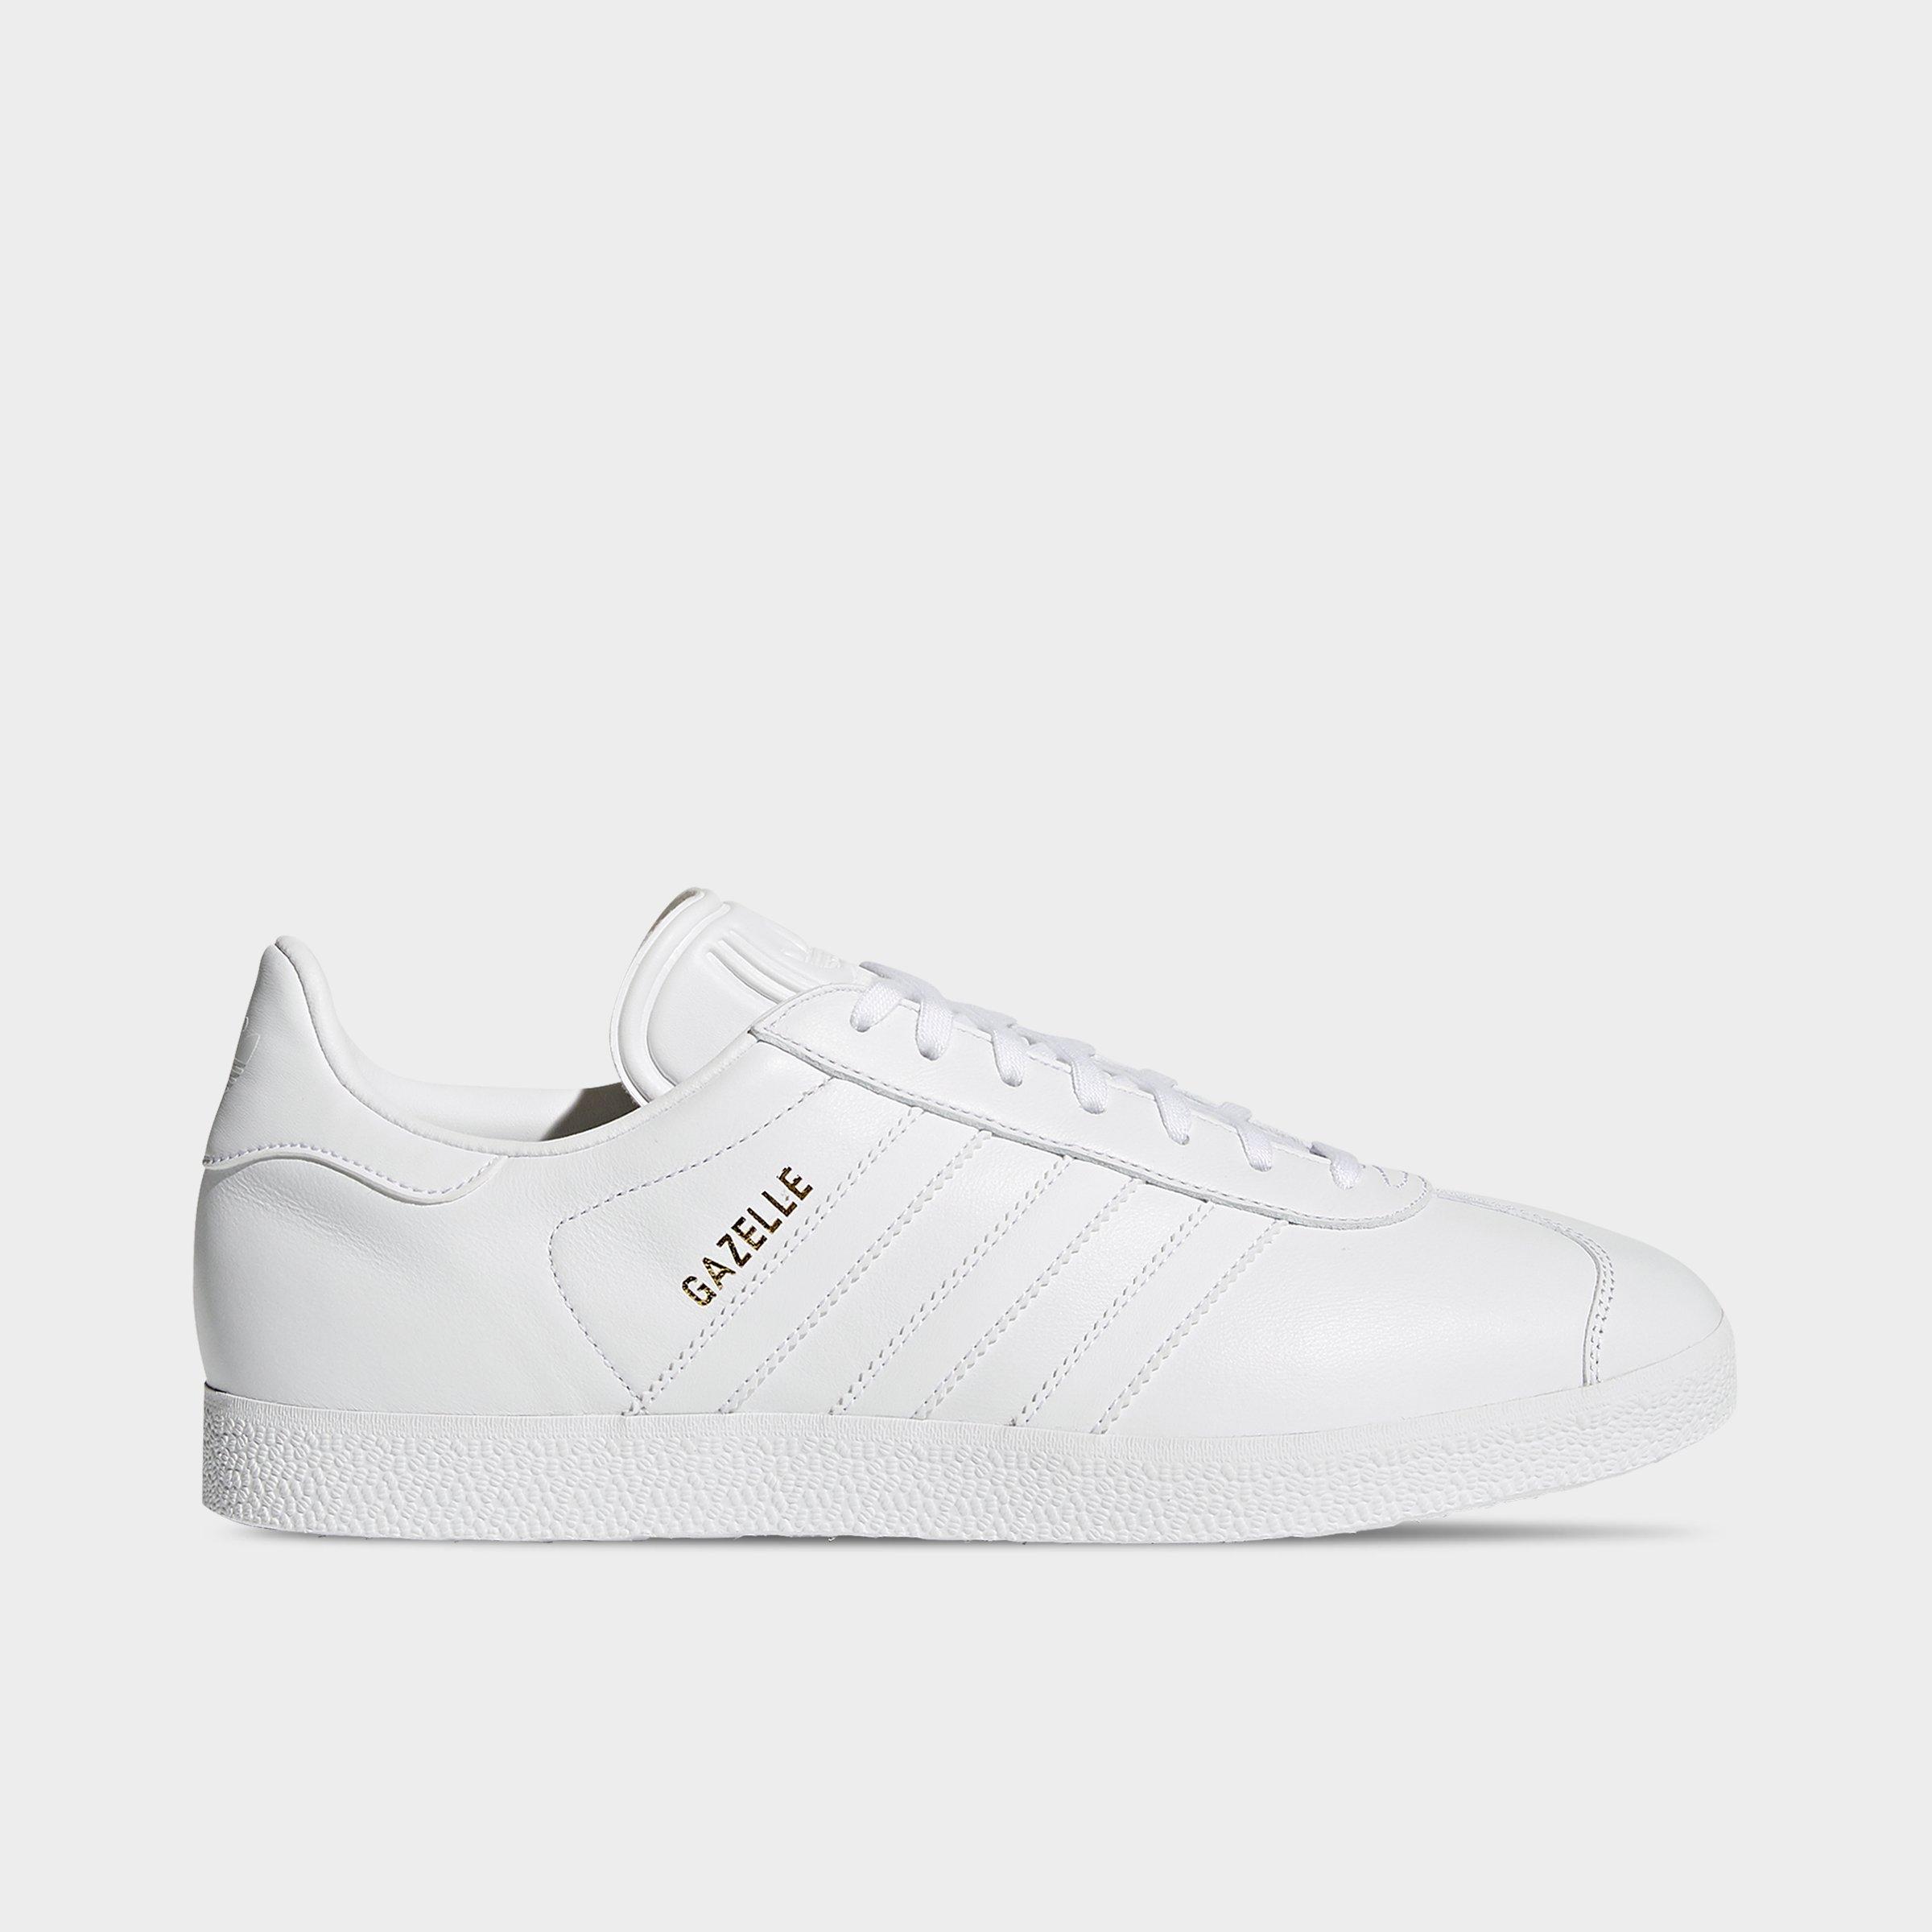 Adidas Originals Gazelle Casual Shoes In White/white/gold Metallic